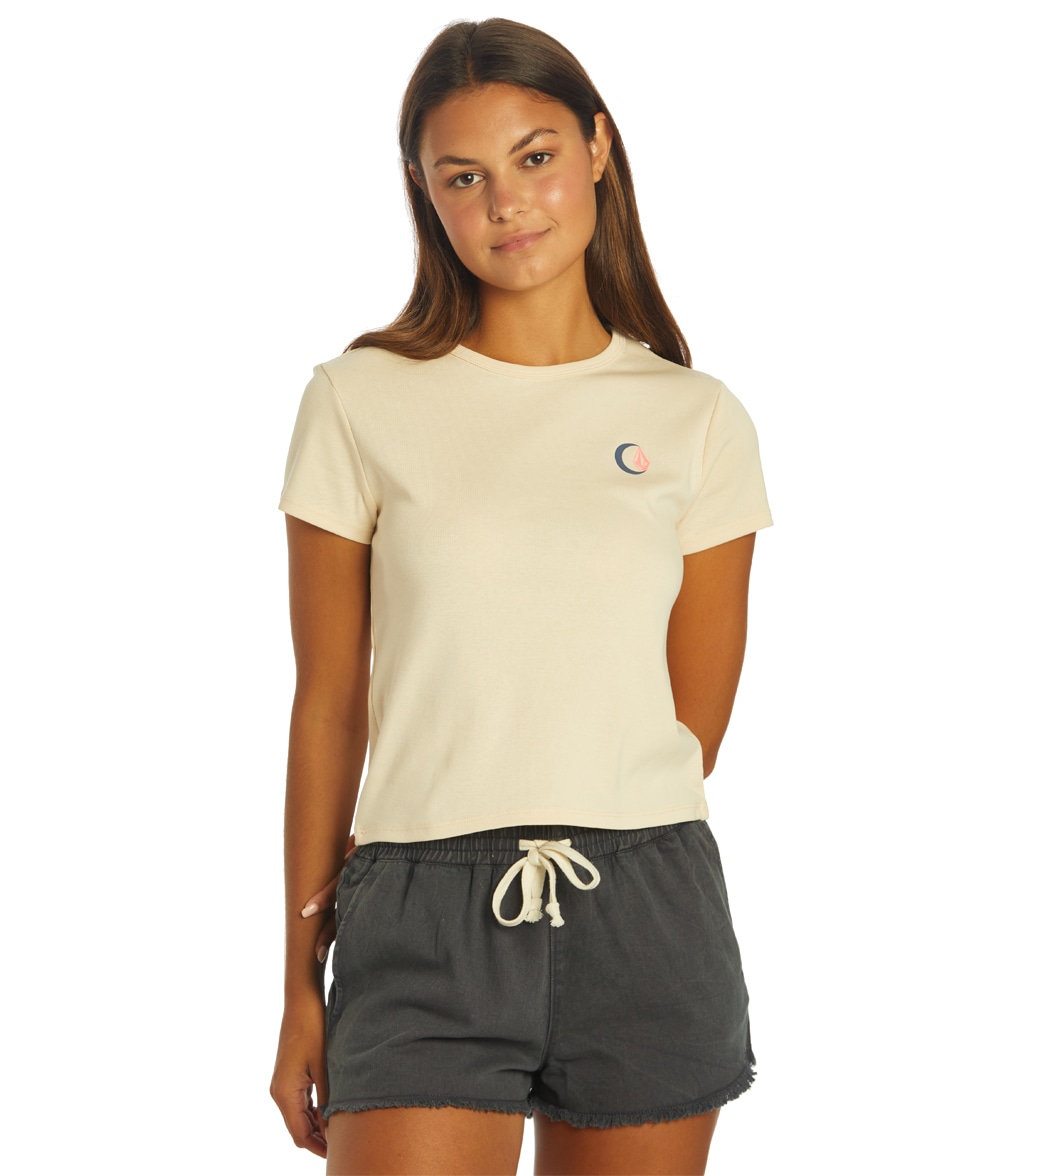 Volcom Women's Have A Clue Tee Shirt - Sand Large Cotton - Swimoutlet.com